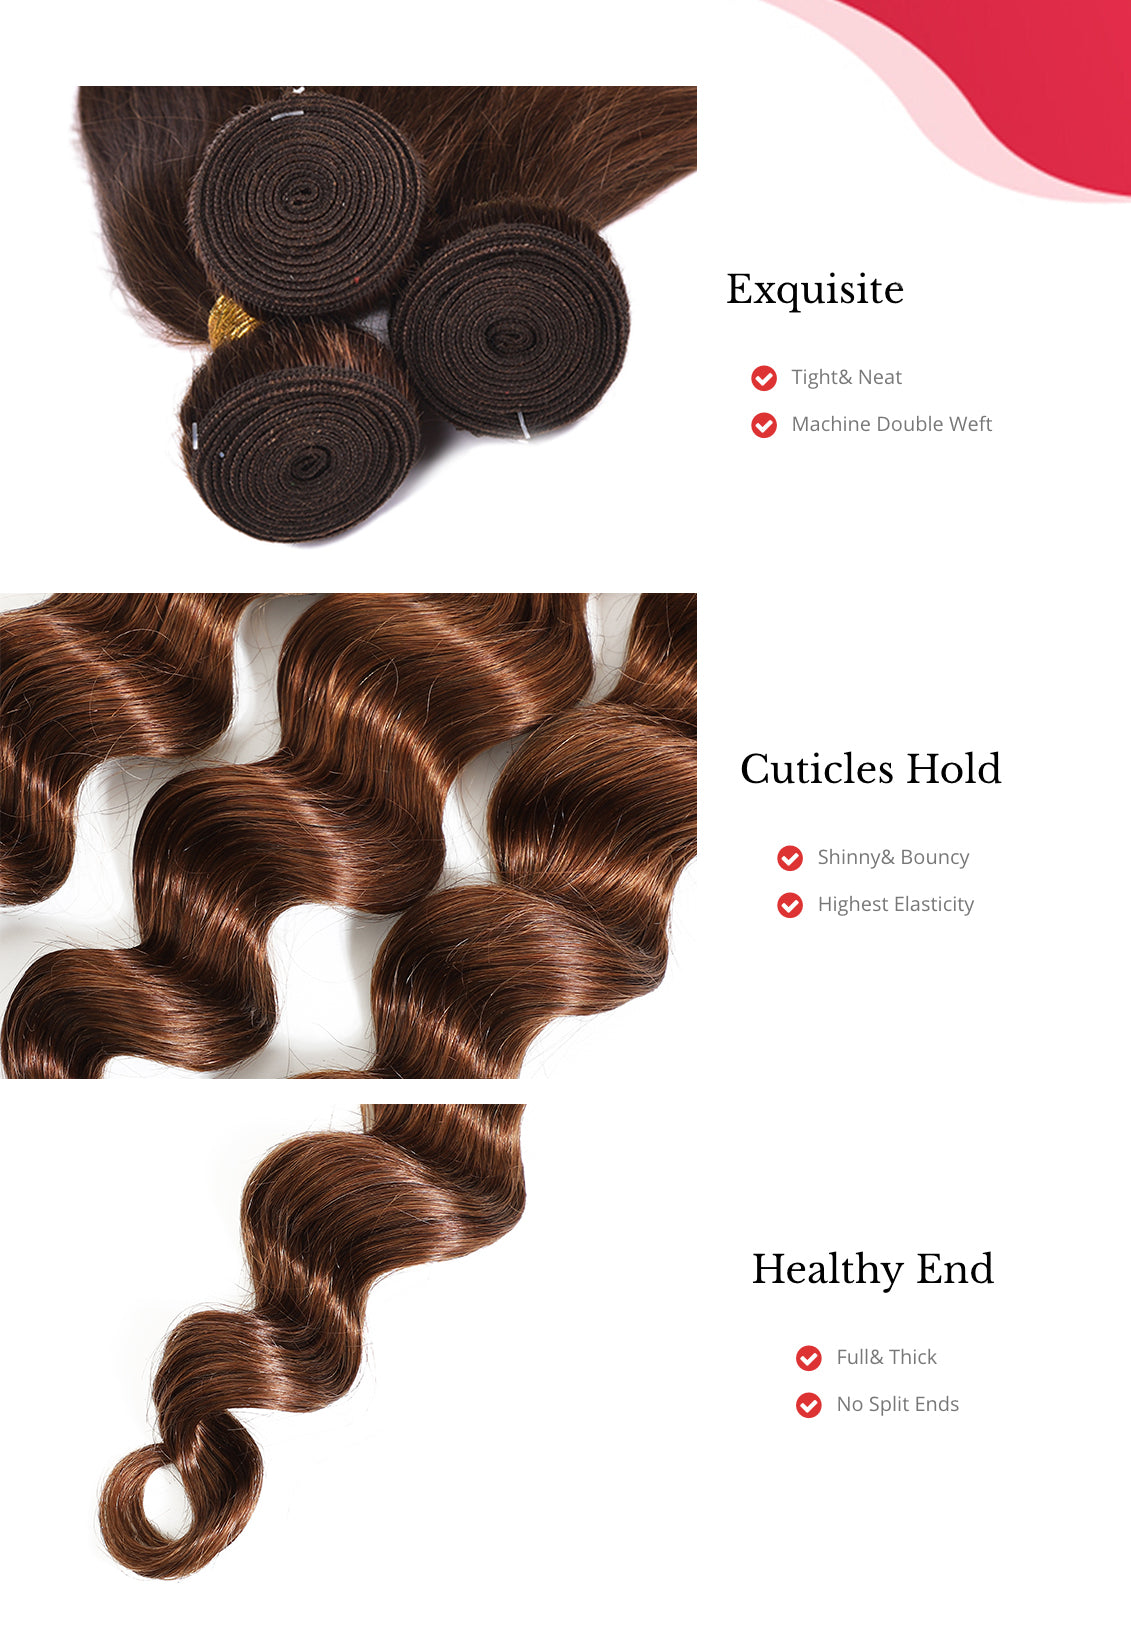 MarchQueen Loose Deep Wave Weave Human Hair Styles 3 Bundles Brazilian Hair 7 Colors On Sale